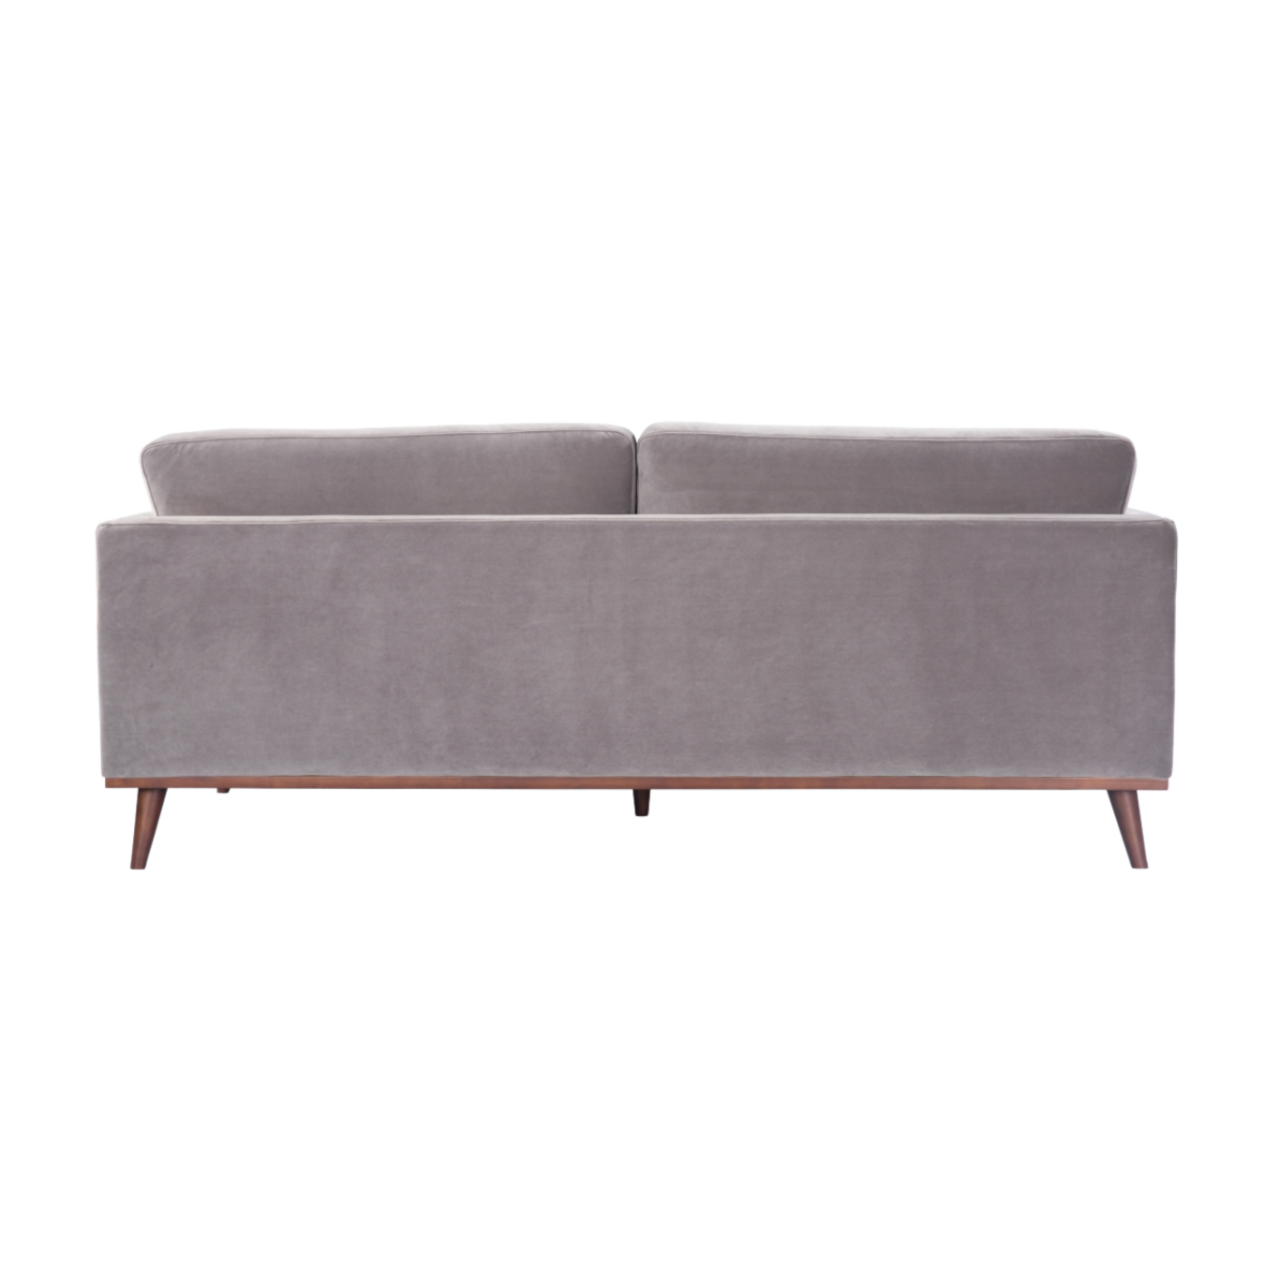 back view of simple modern 3 seater sofa in stone grey velvet upholstery